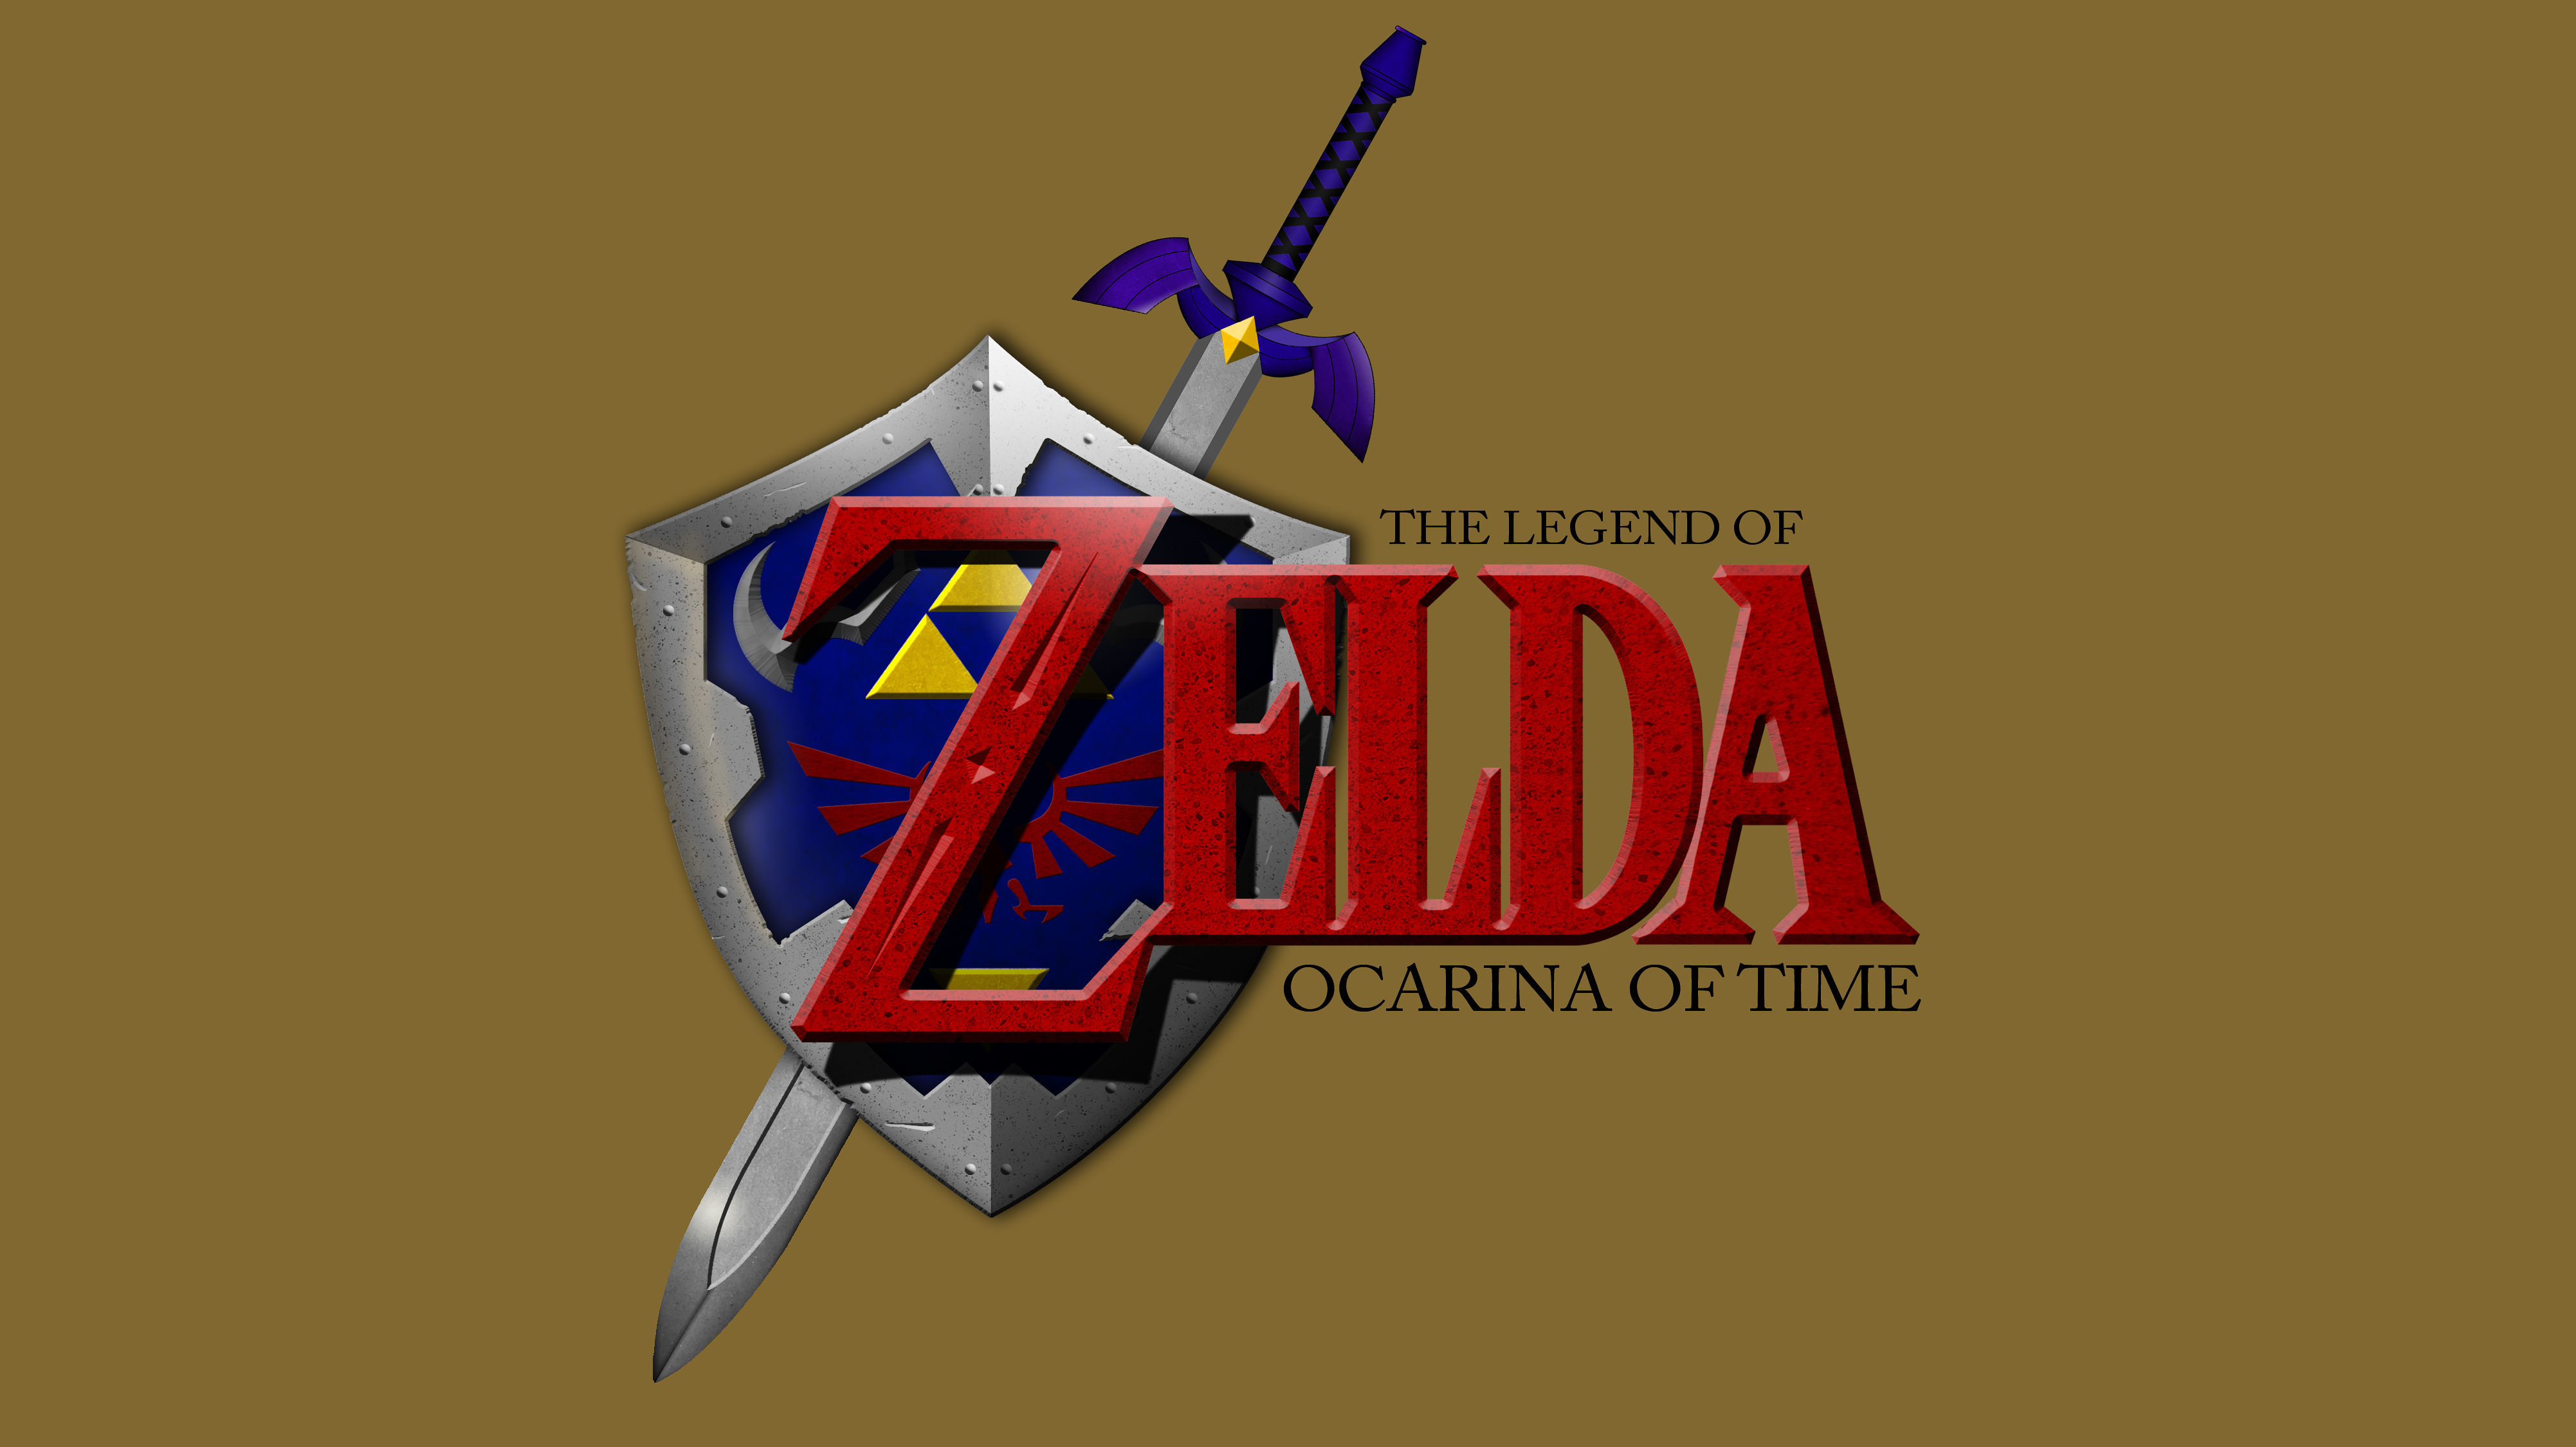 Lon Lon Ranch - The Legend of Zelda: Ocarina of Time (평화 애절 쓸쓸 잔잔 고요 애잔 아련 OST 게임 )